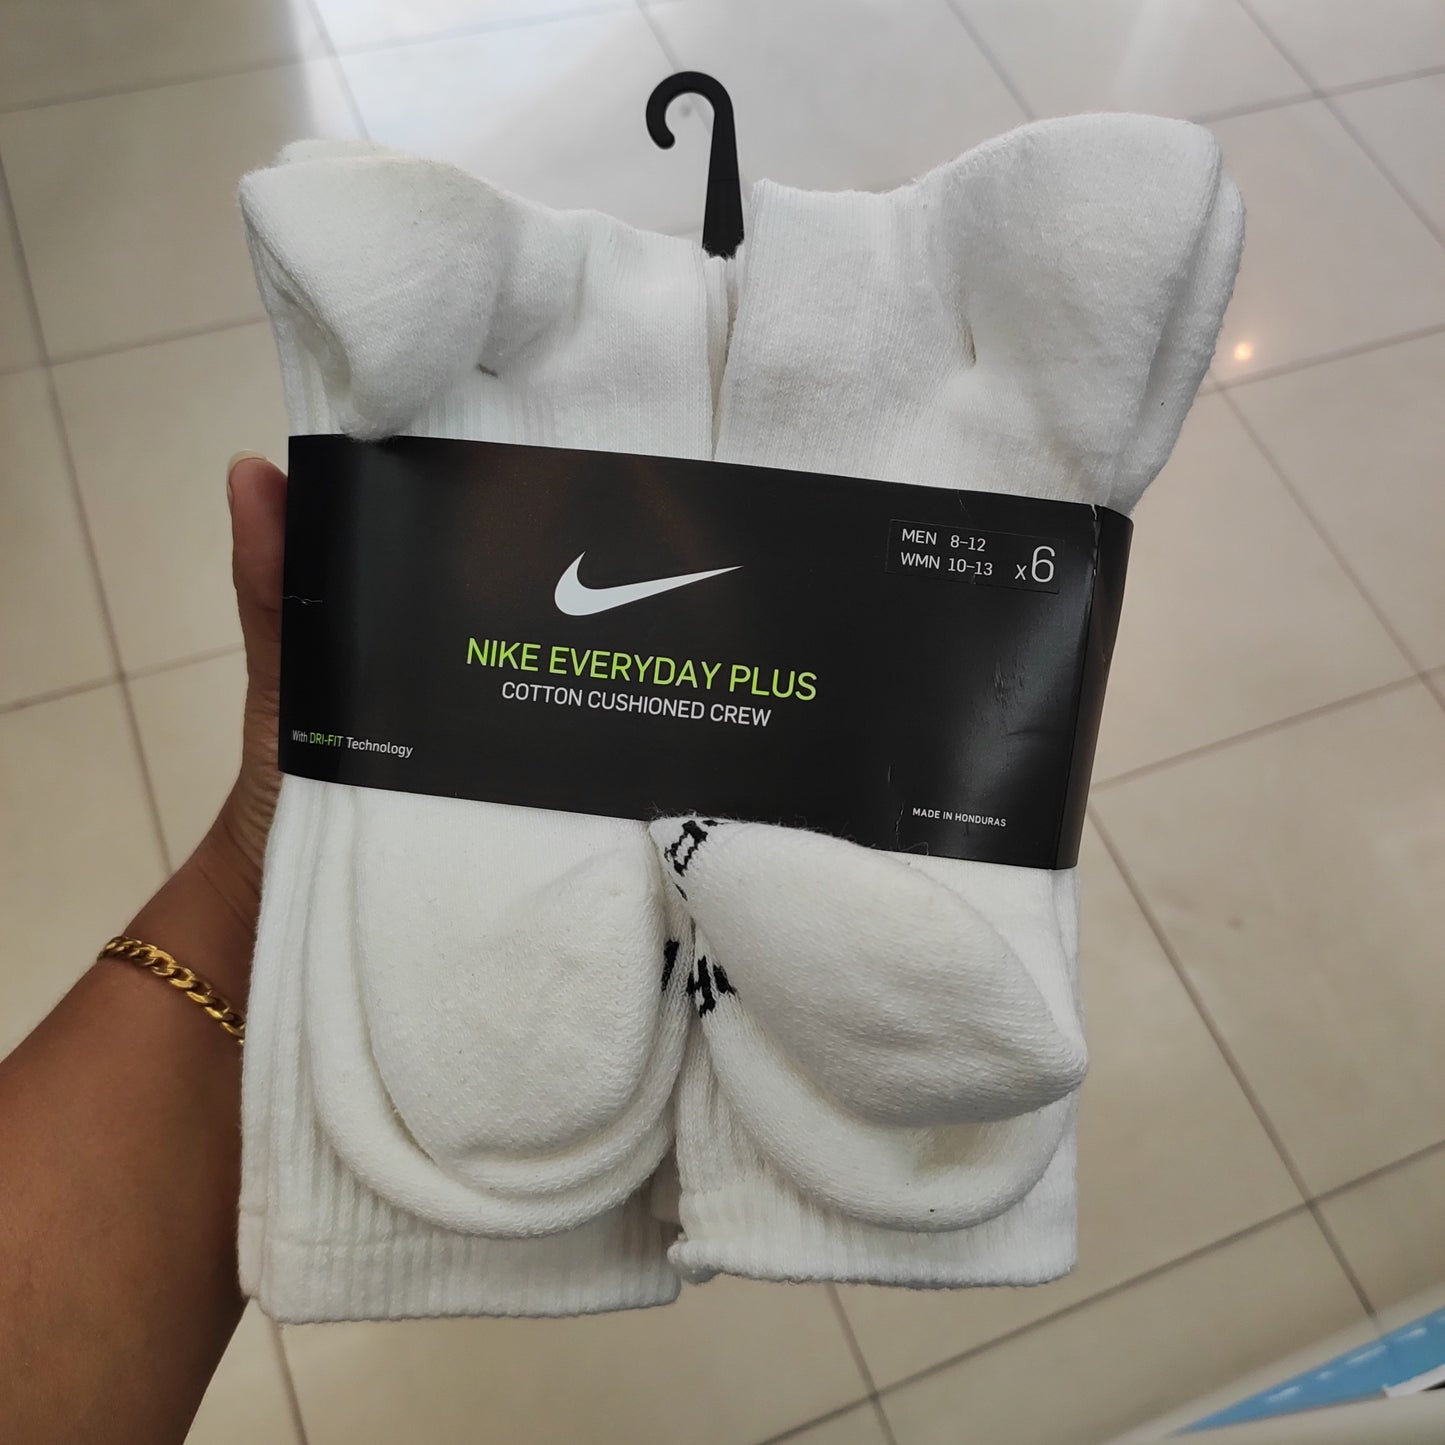 Nike Everyday Plus Cotton Cushioned Crew x6